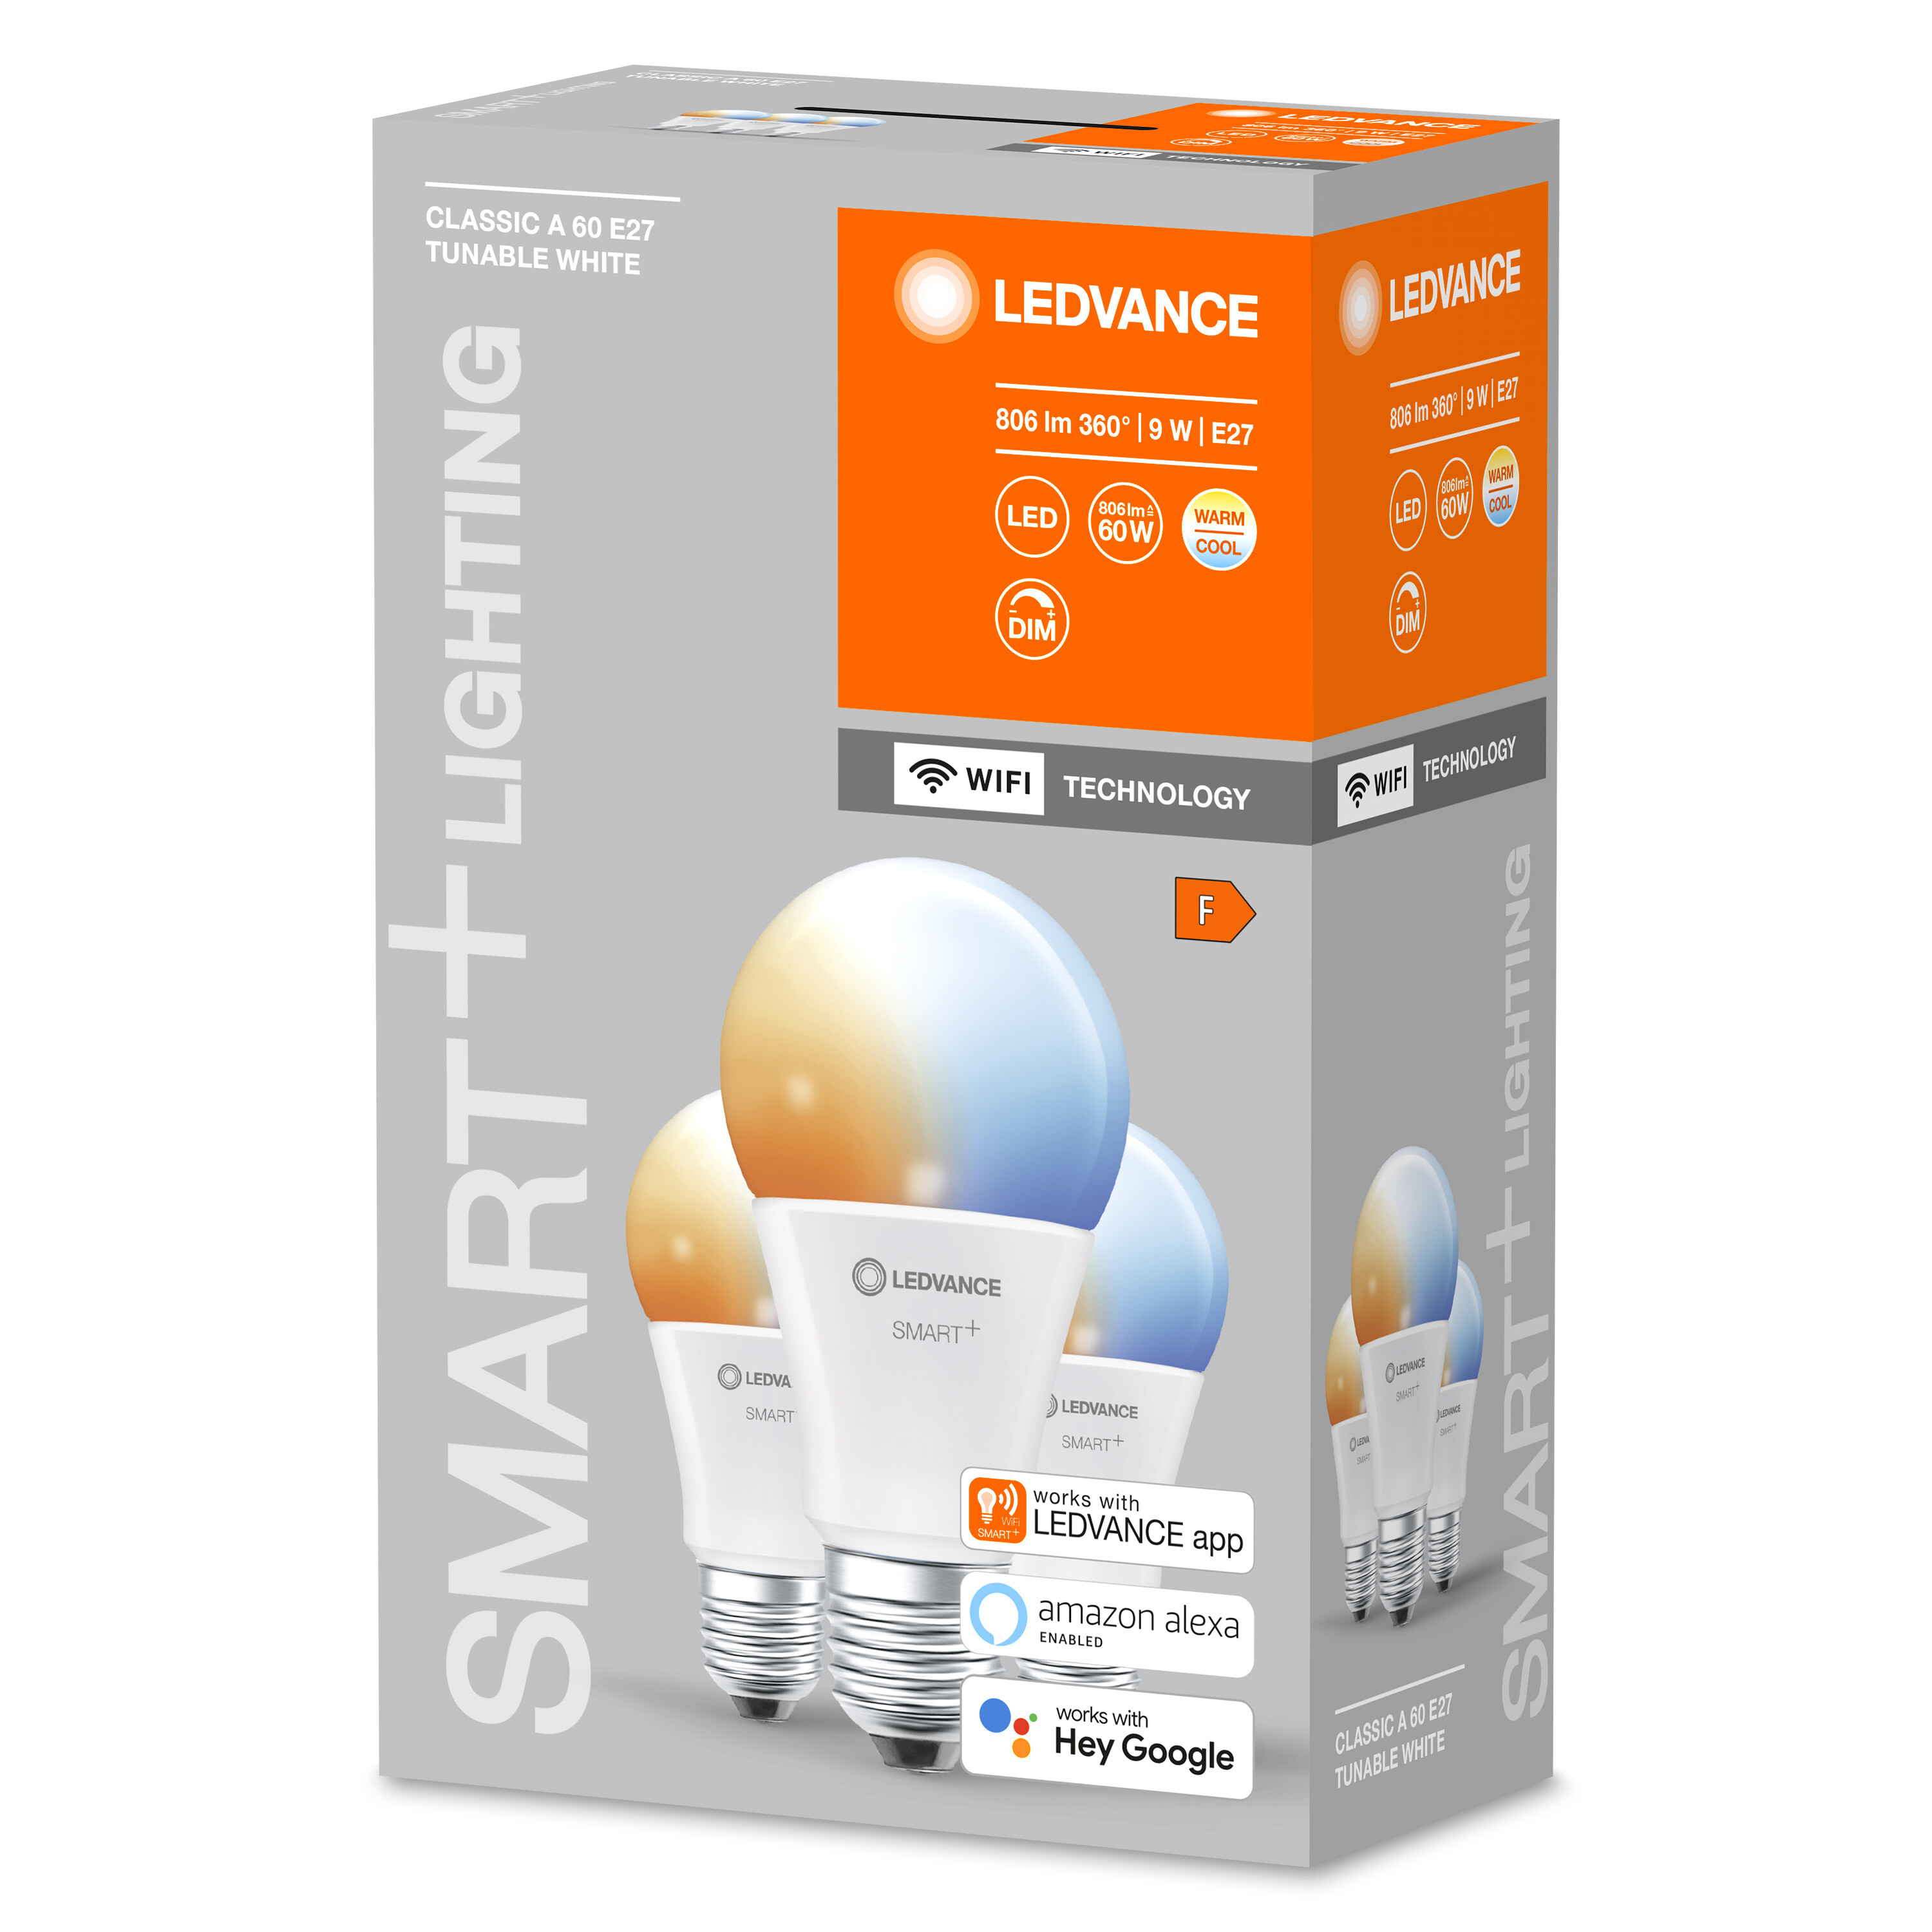 Classic White änderbar Tunable WiFi LED LEDVANCE SMART+ Lichtfarbe Lampe